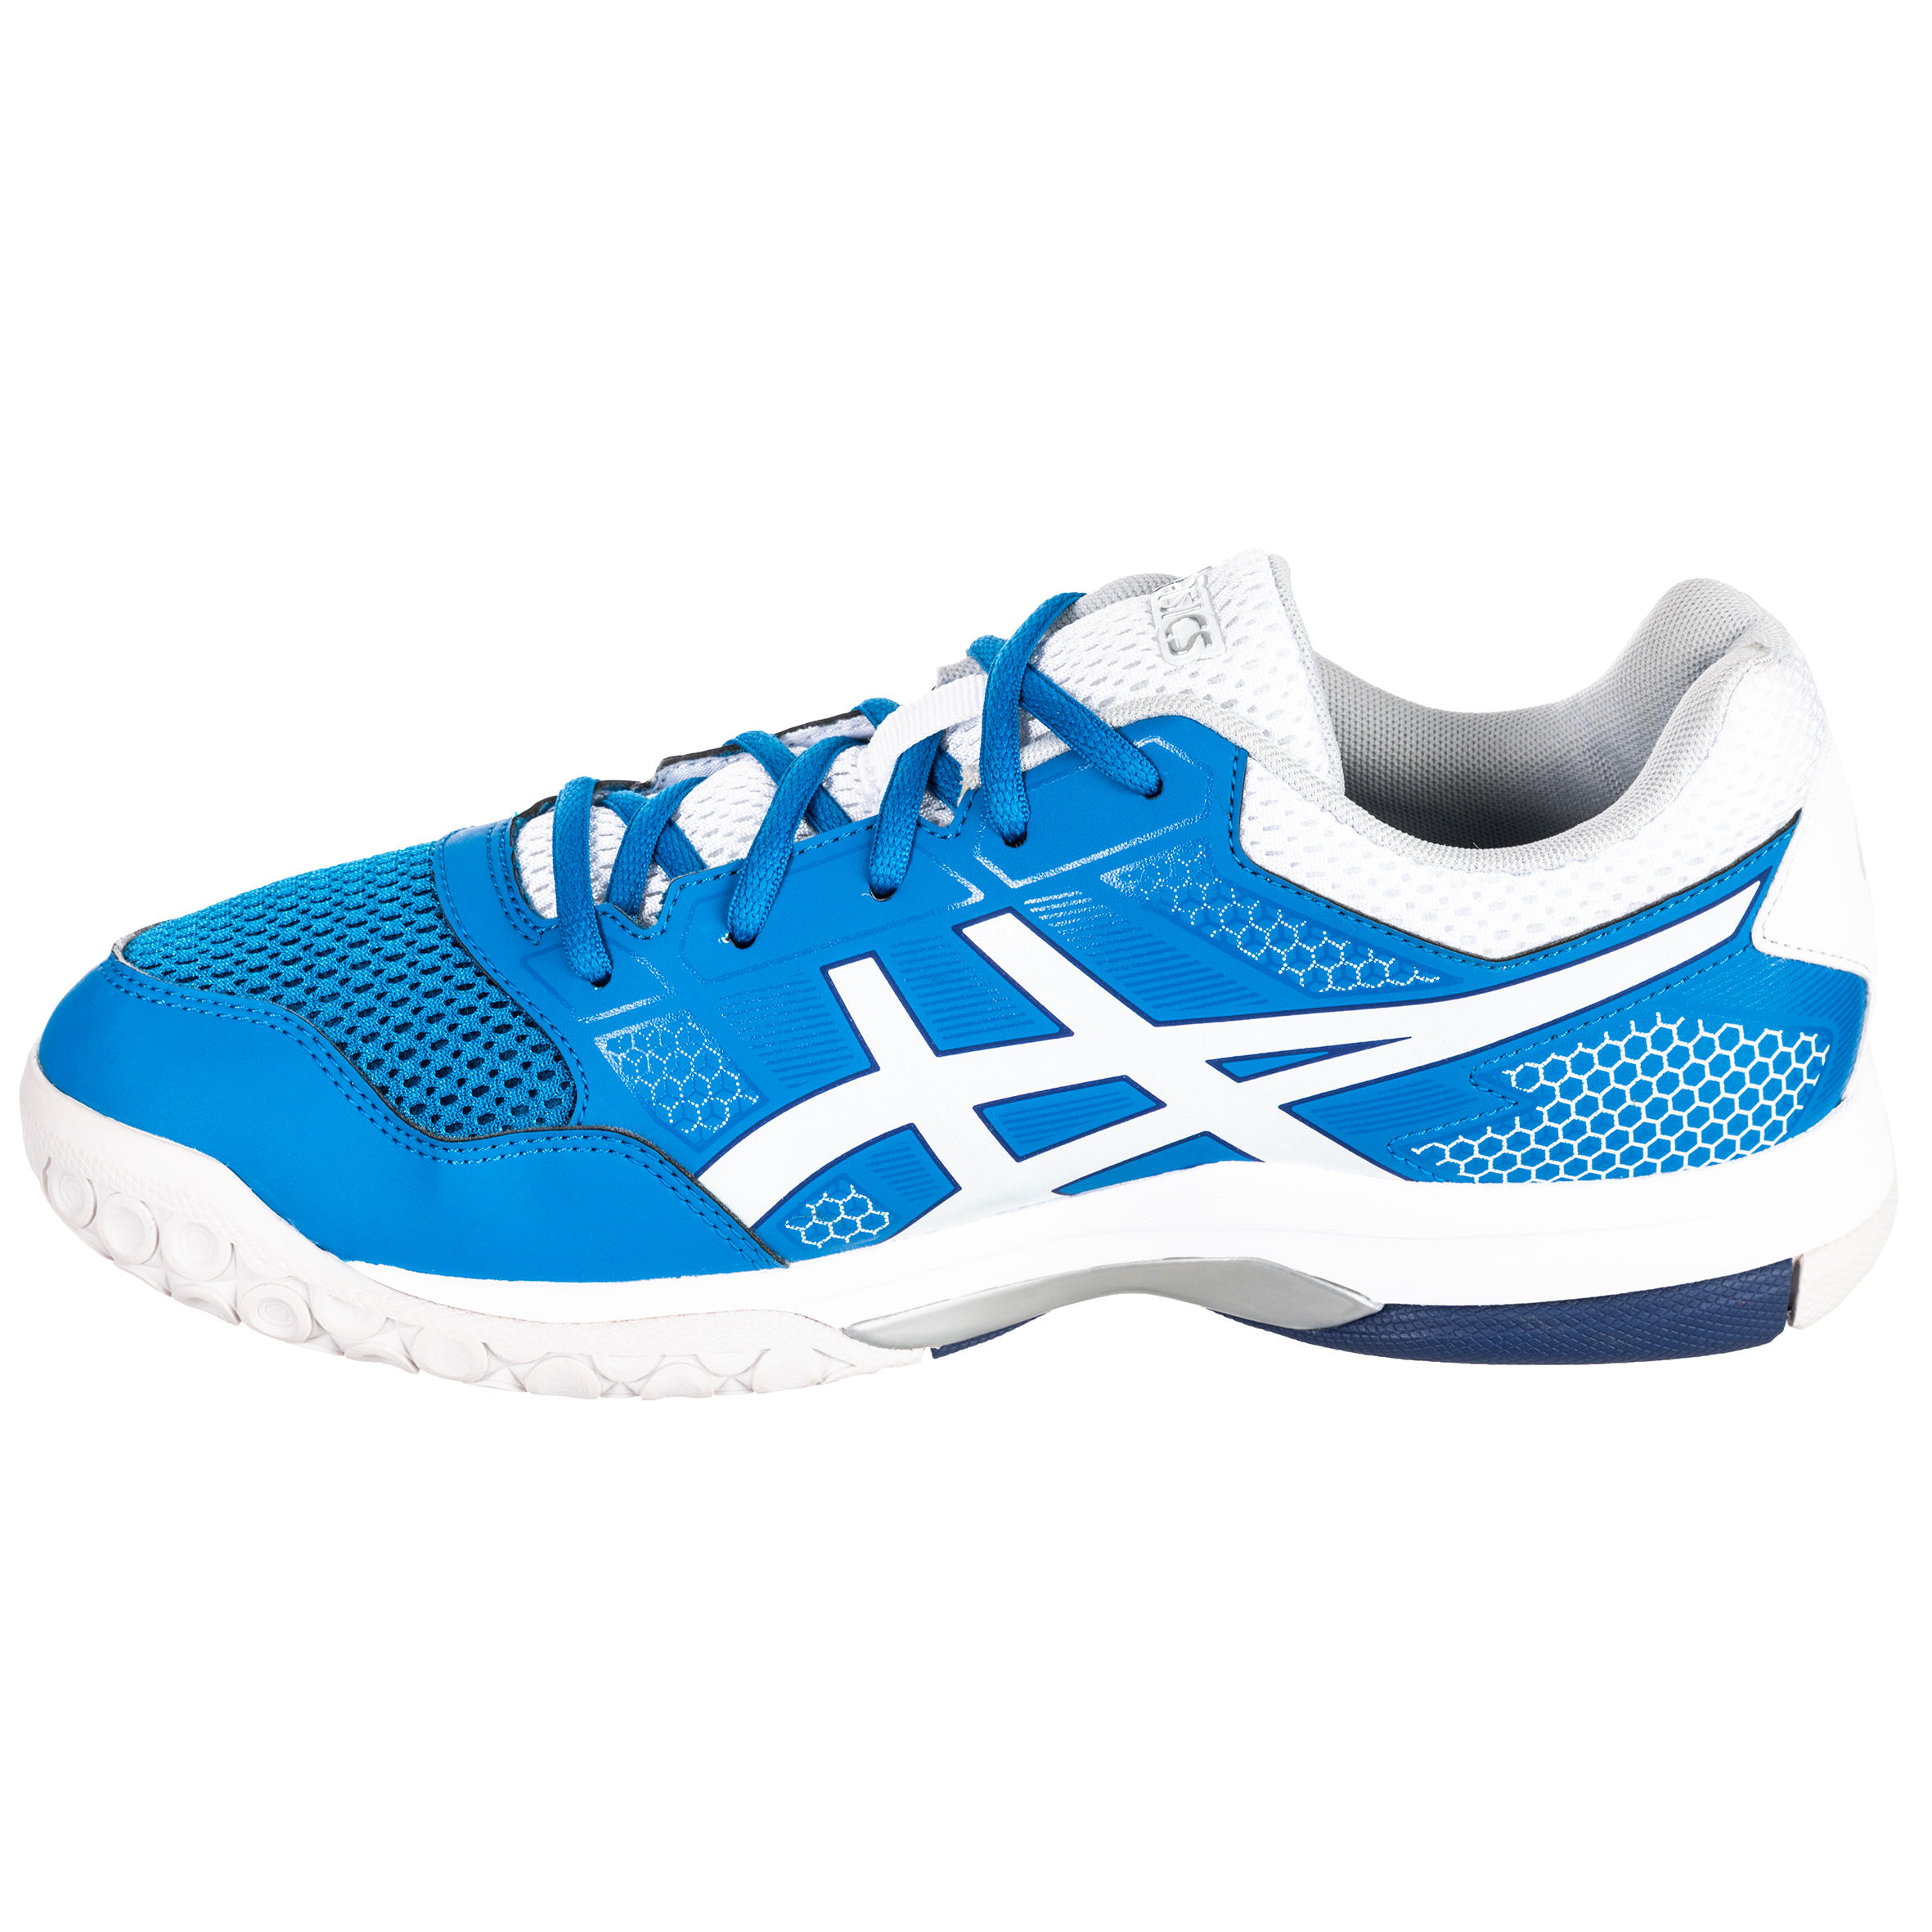 Men's Badminton/Squash/Indoor Sports Shoes Gel Rocket 8 - Blue/White 7/10